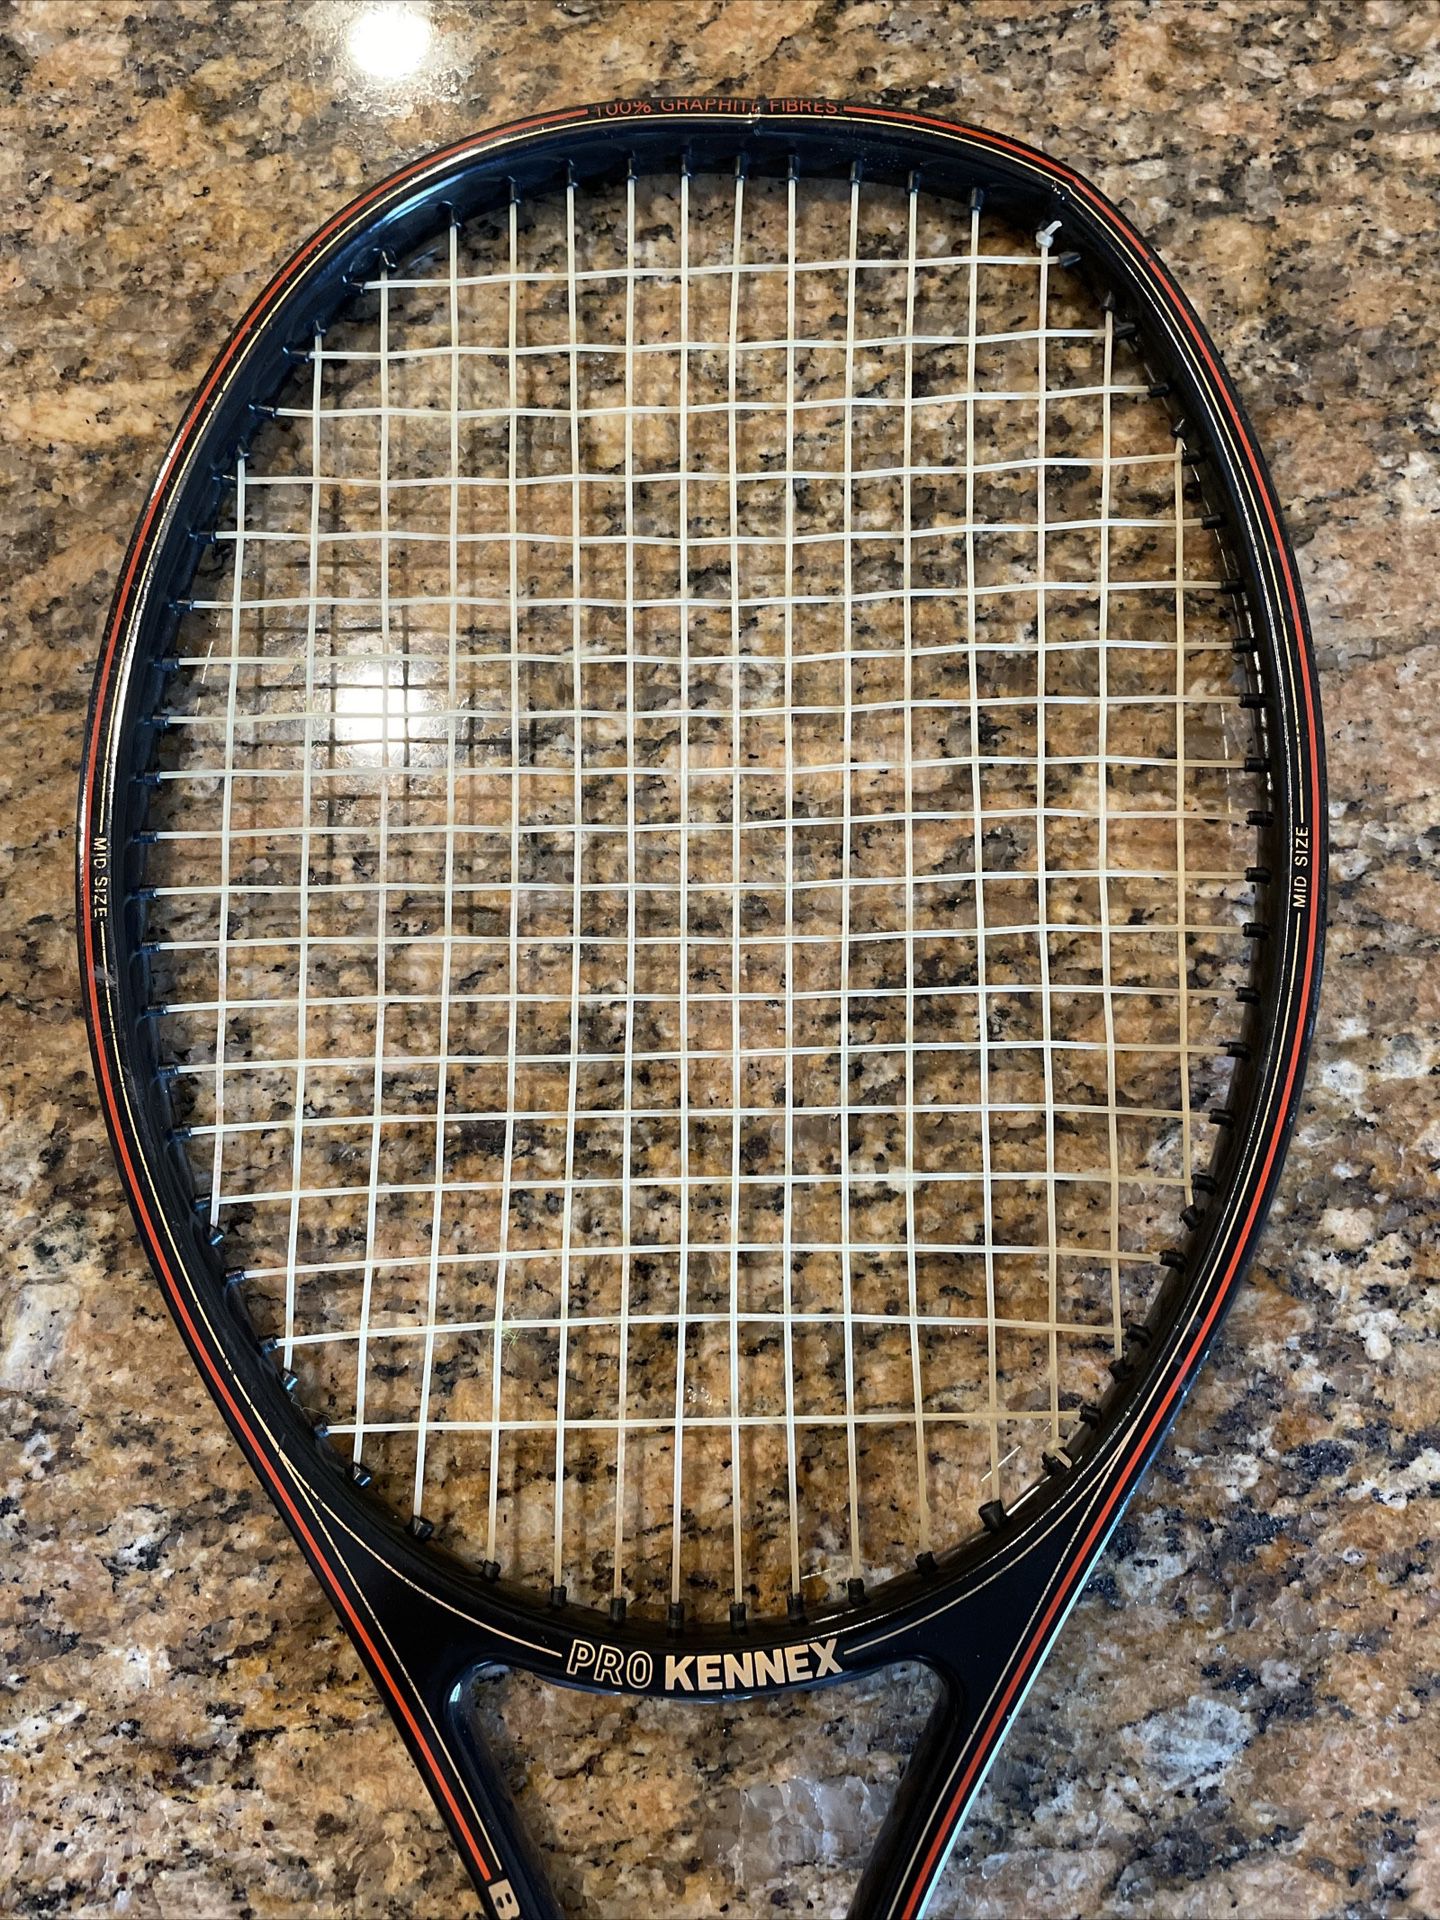 Pro Kennex Black Ace Tennis Racket